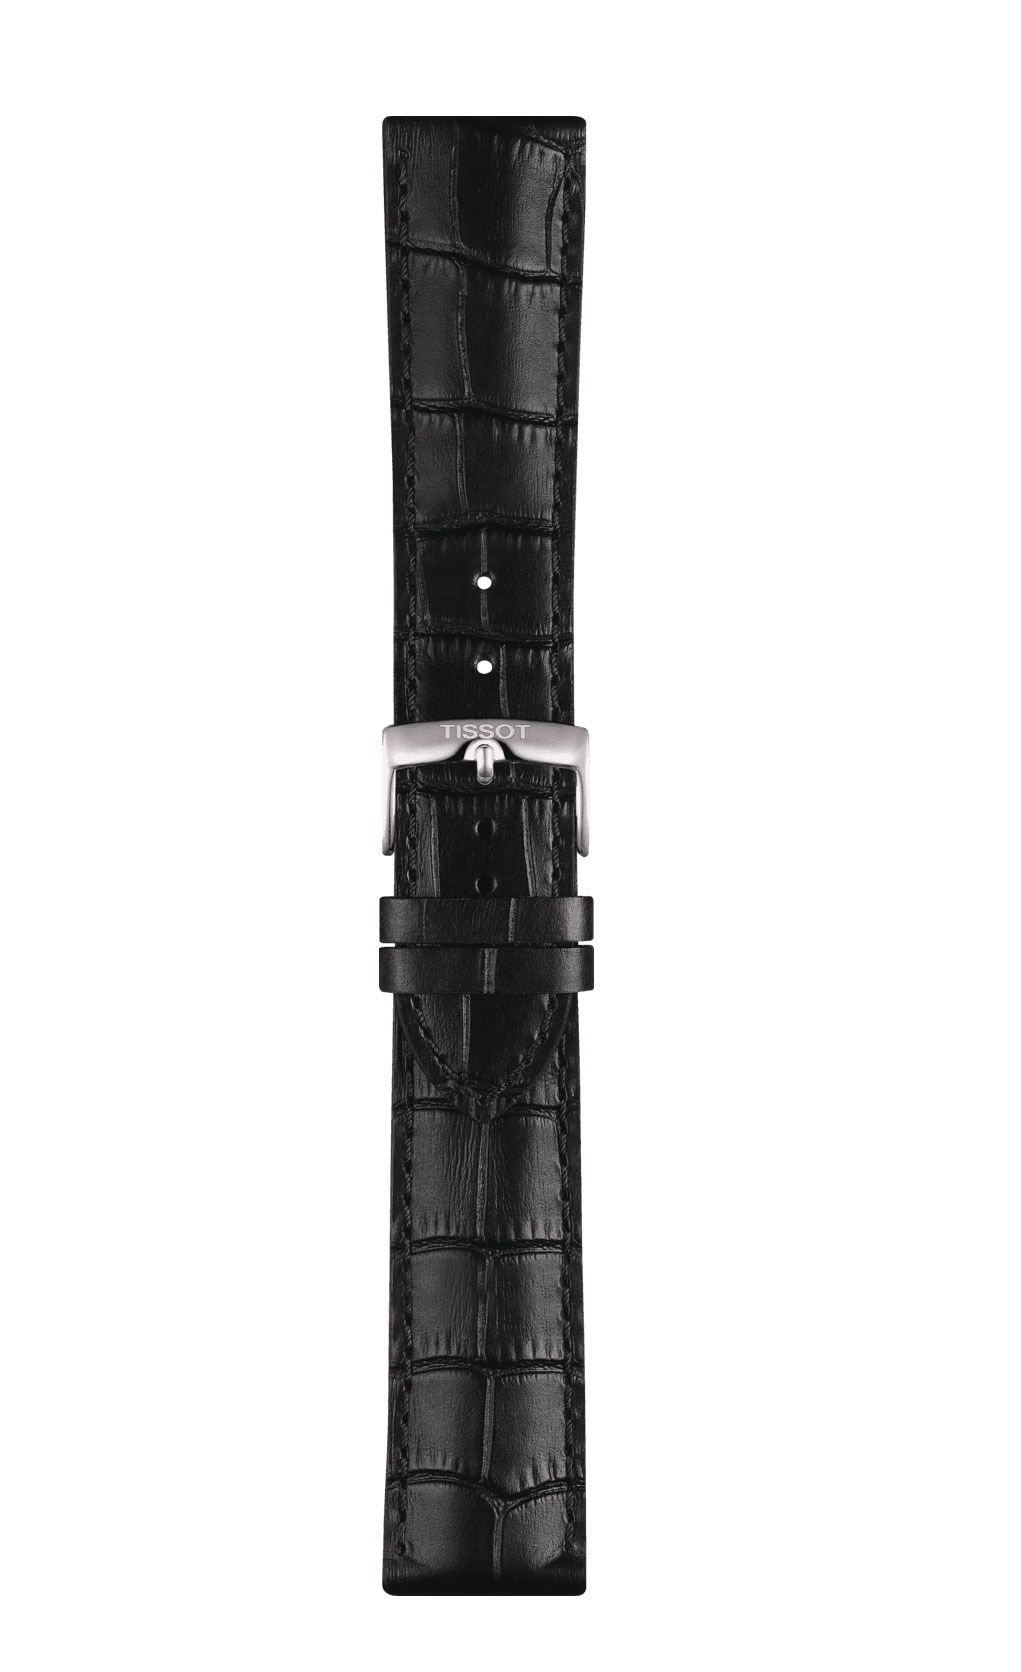 Original Tissot Lederarmband 22mm Schwarz T852.041.653